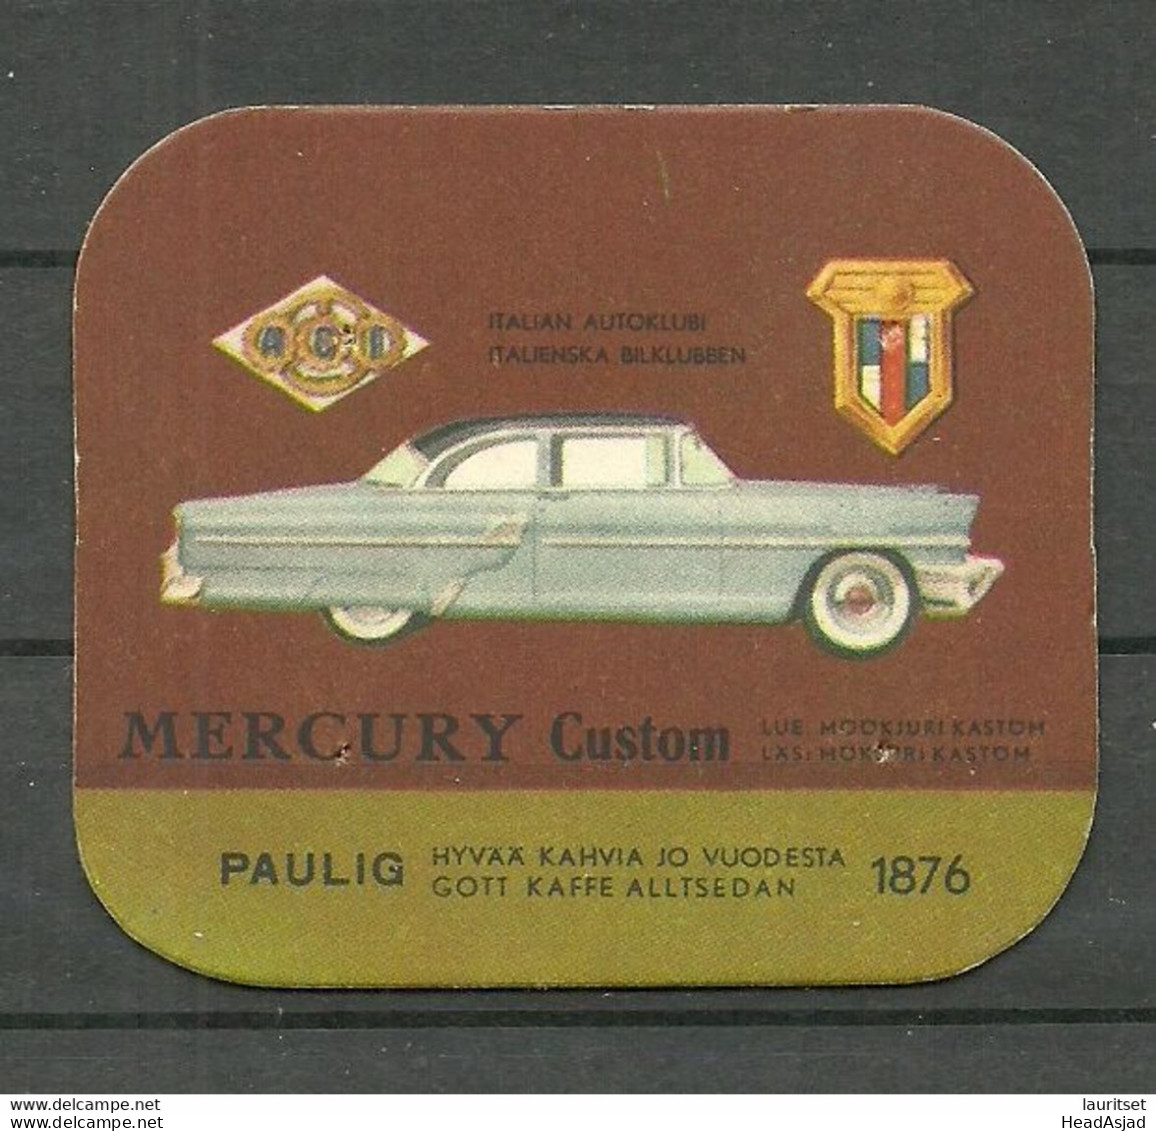 FINLAND Paulig Coffee Collection Card Mercury Custom Italian Auto Car Advertising Reklame Sammelkarte - Cars